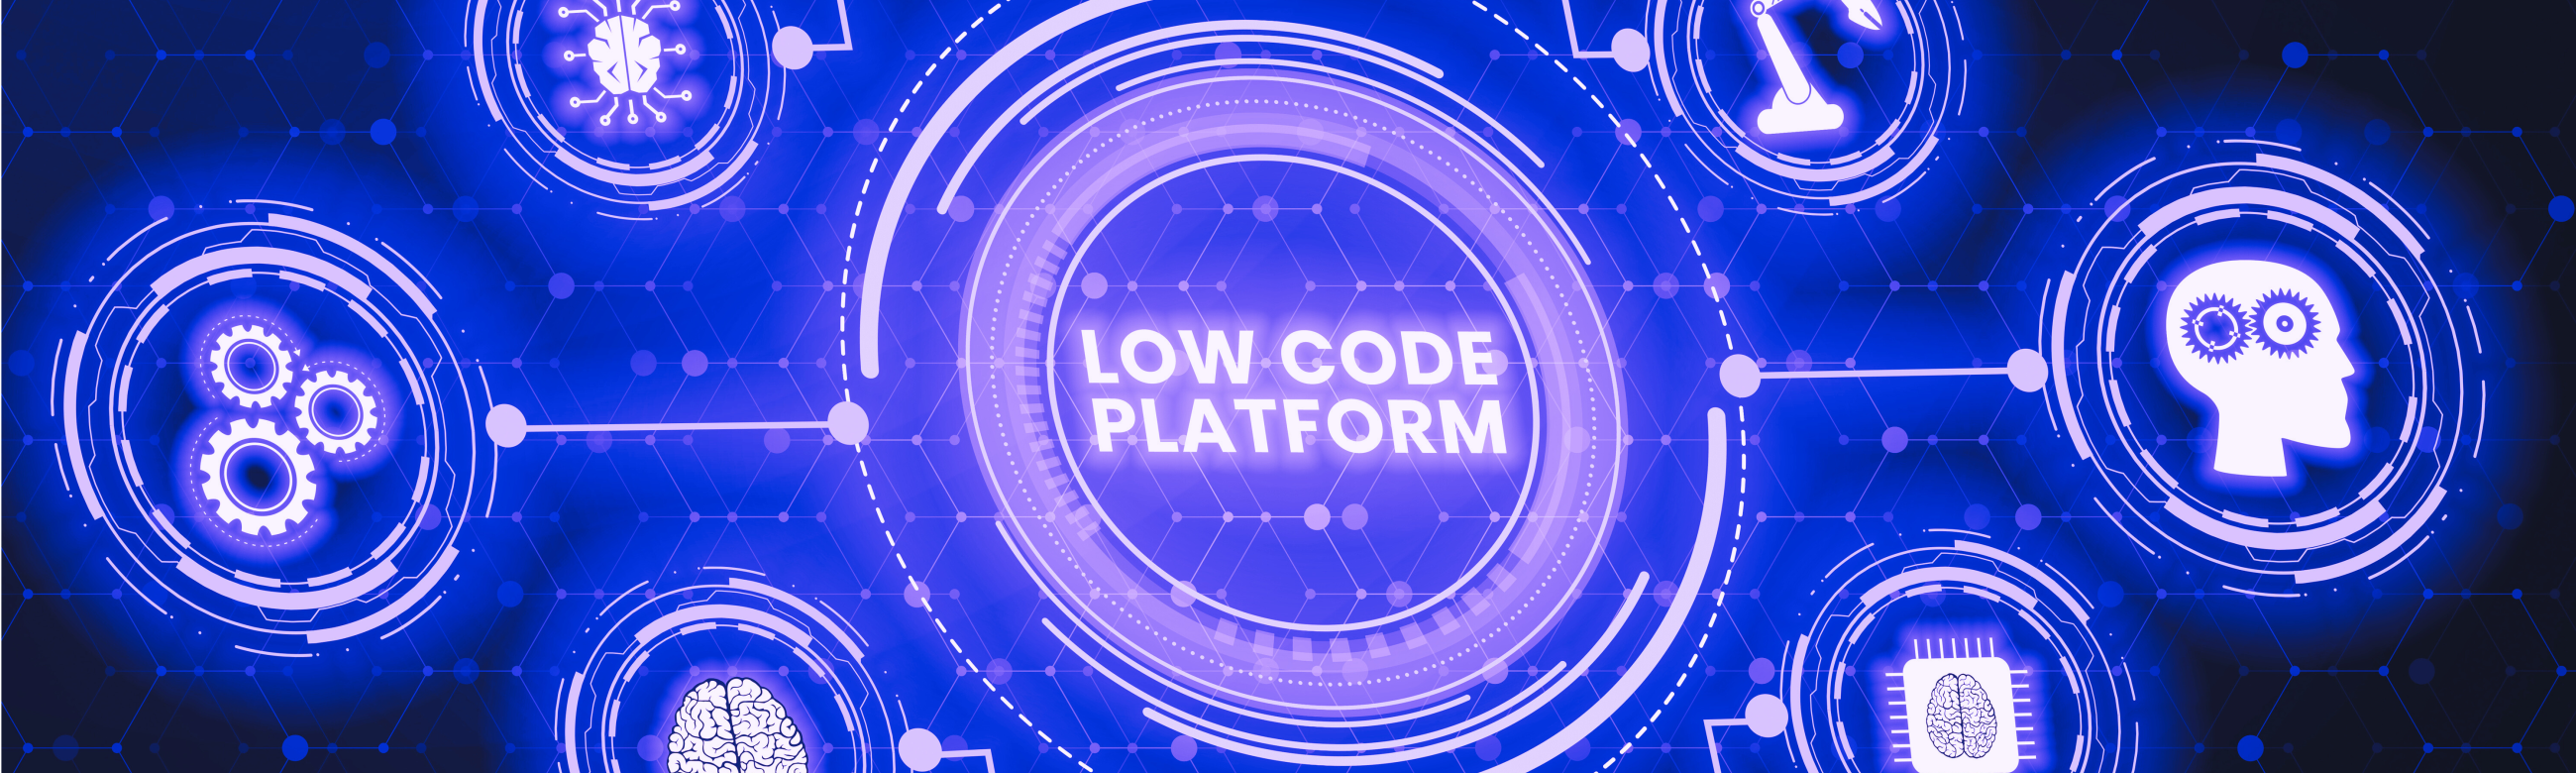 Low-code logo